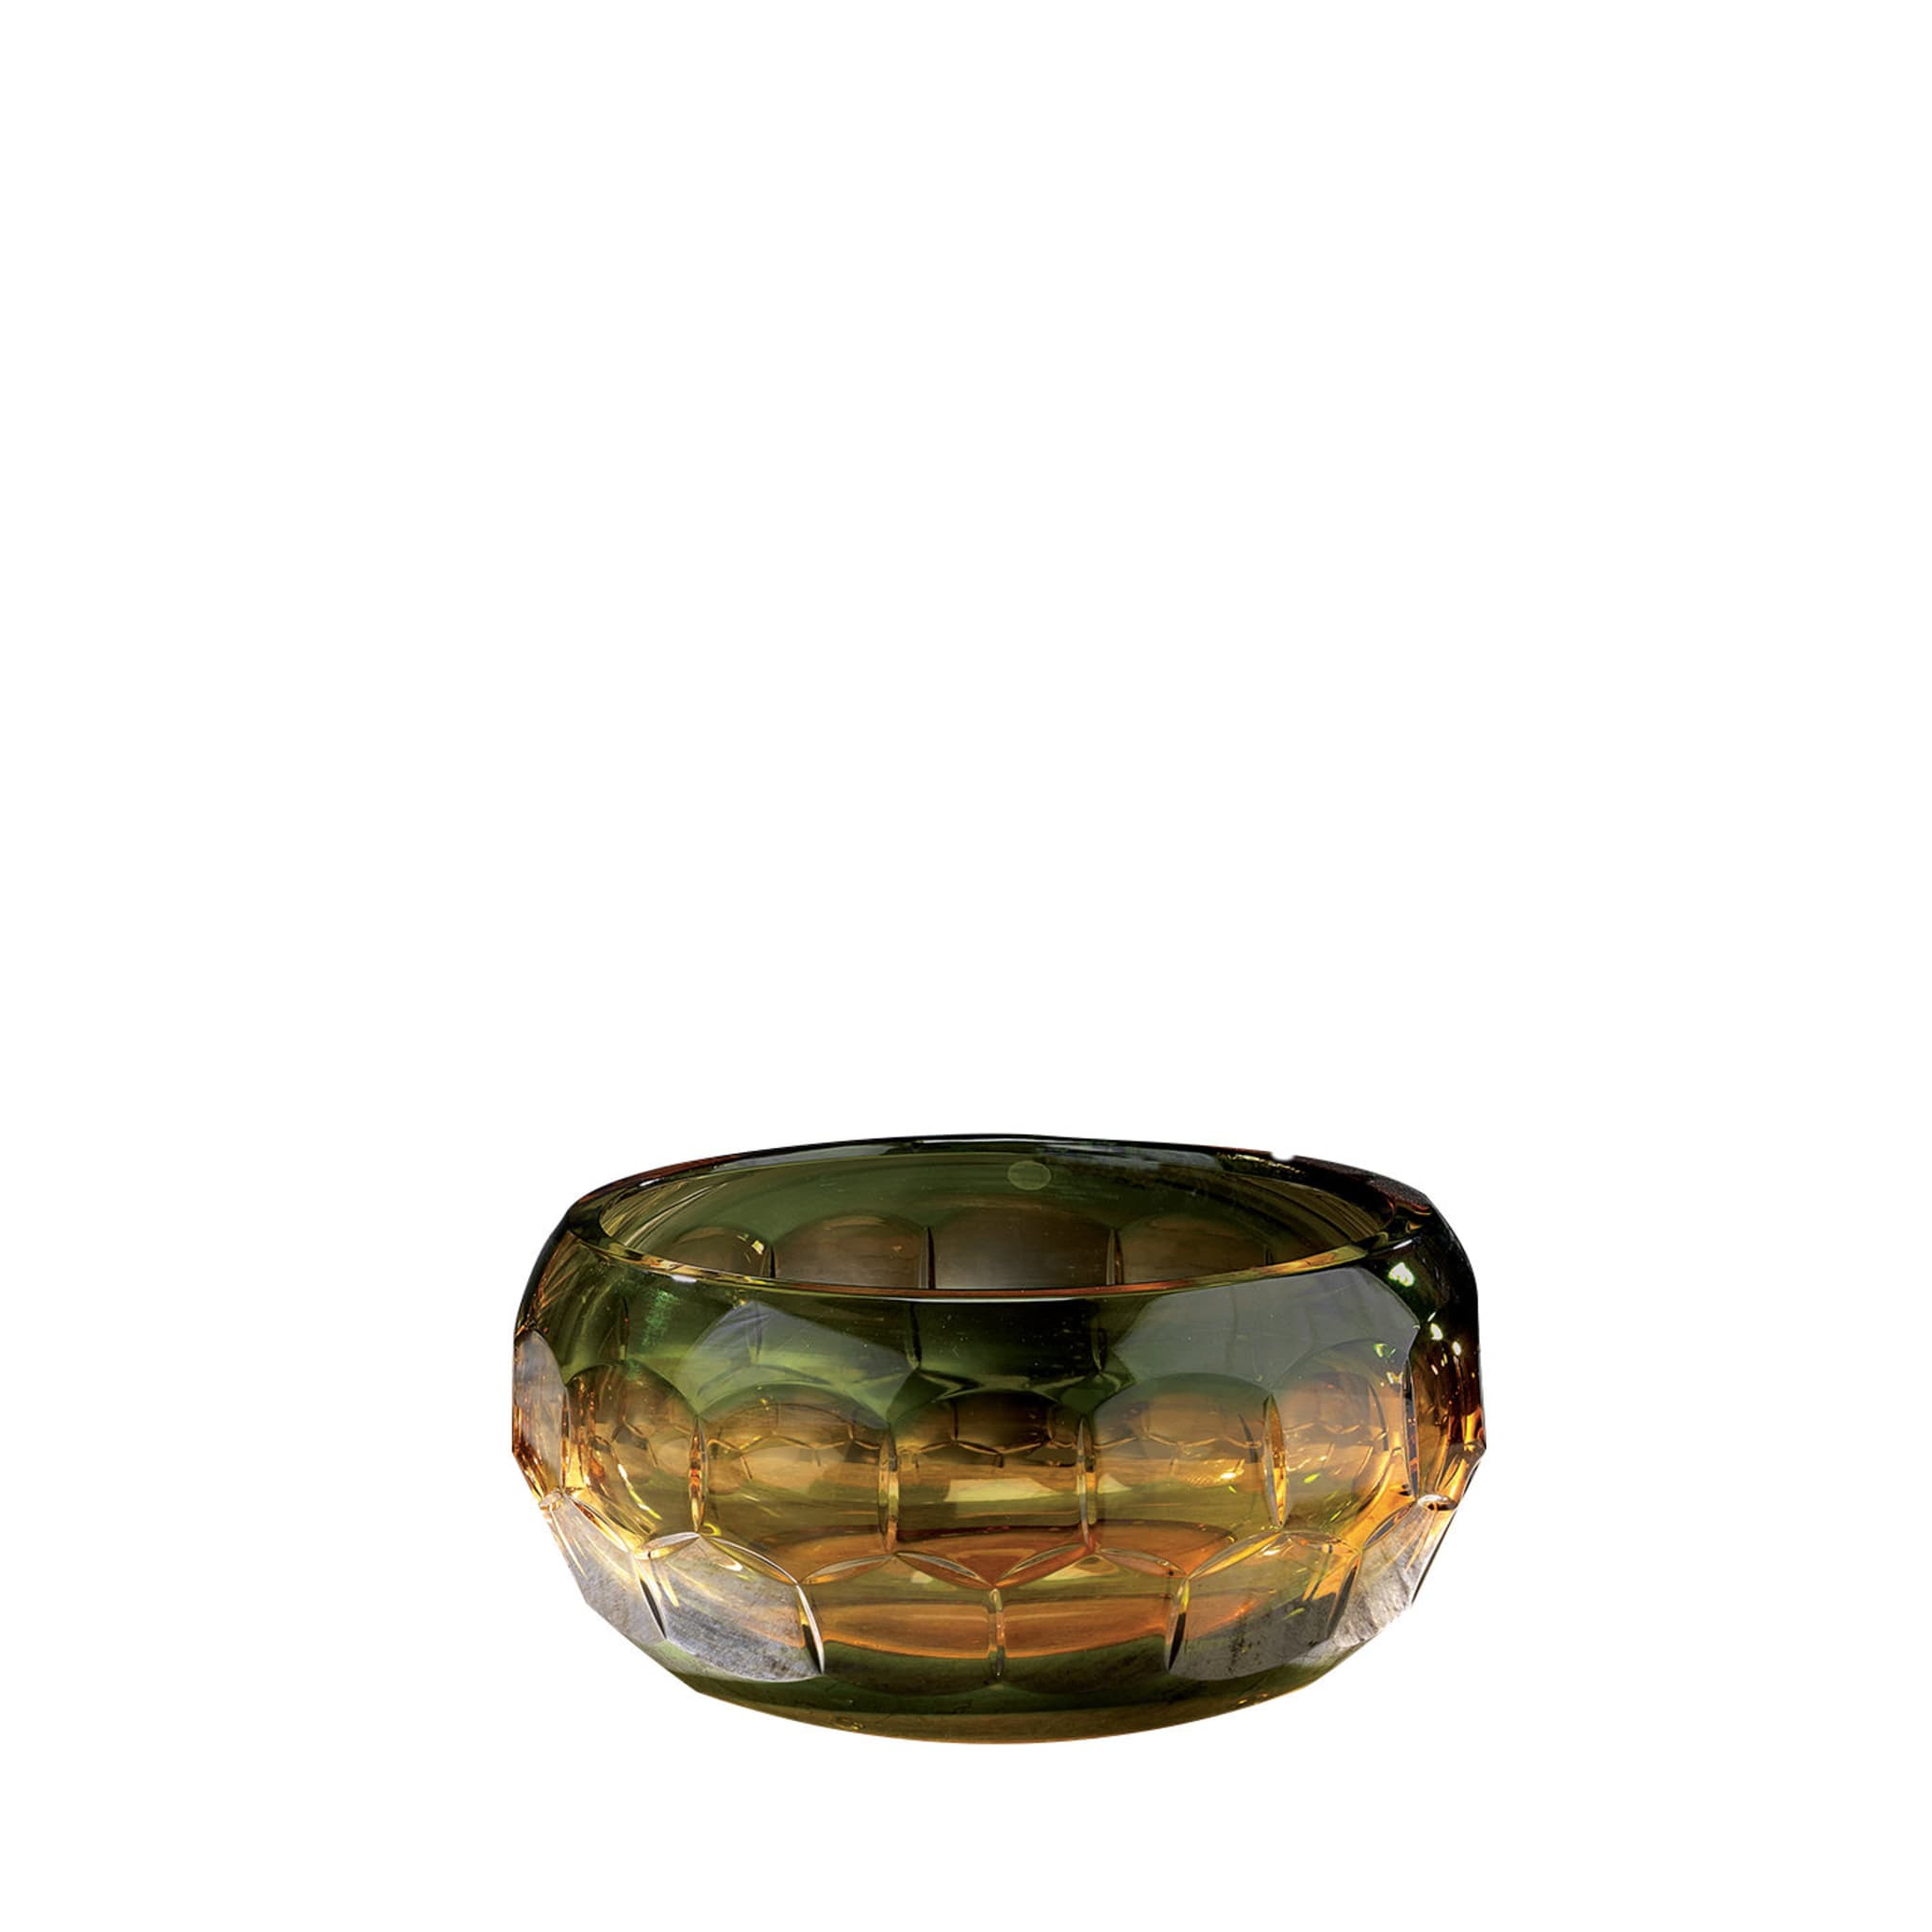 Bol de cristal en ambre et vert - Vue principale